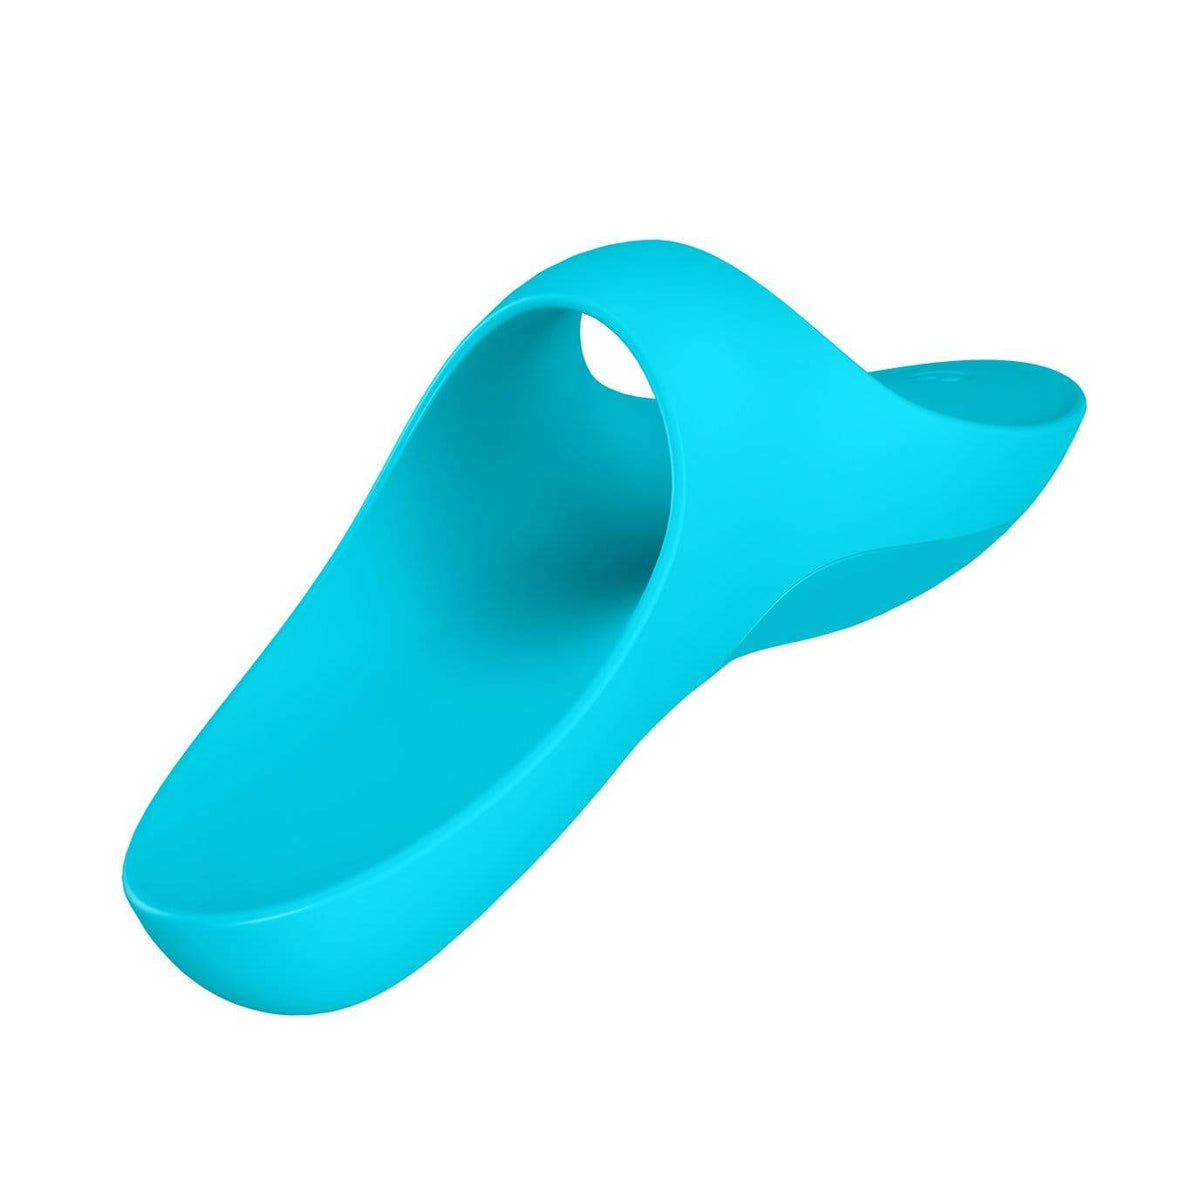 Satisfyer - Teaser Finger Vibrator (Light Blue)    Clit Massager (Vibration) Rechargeable